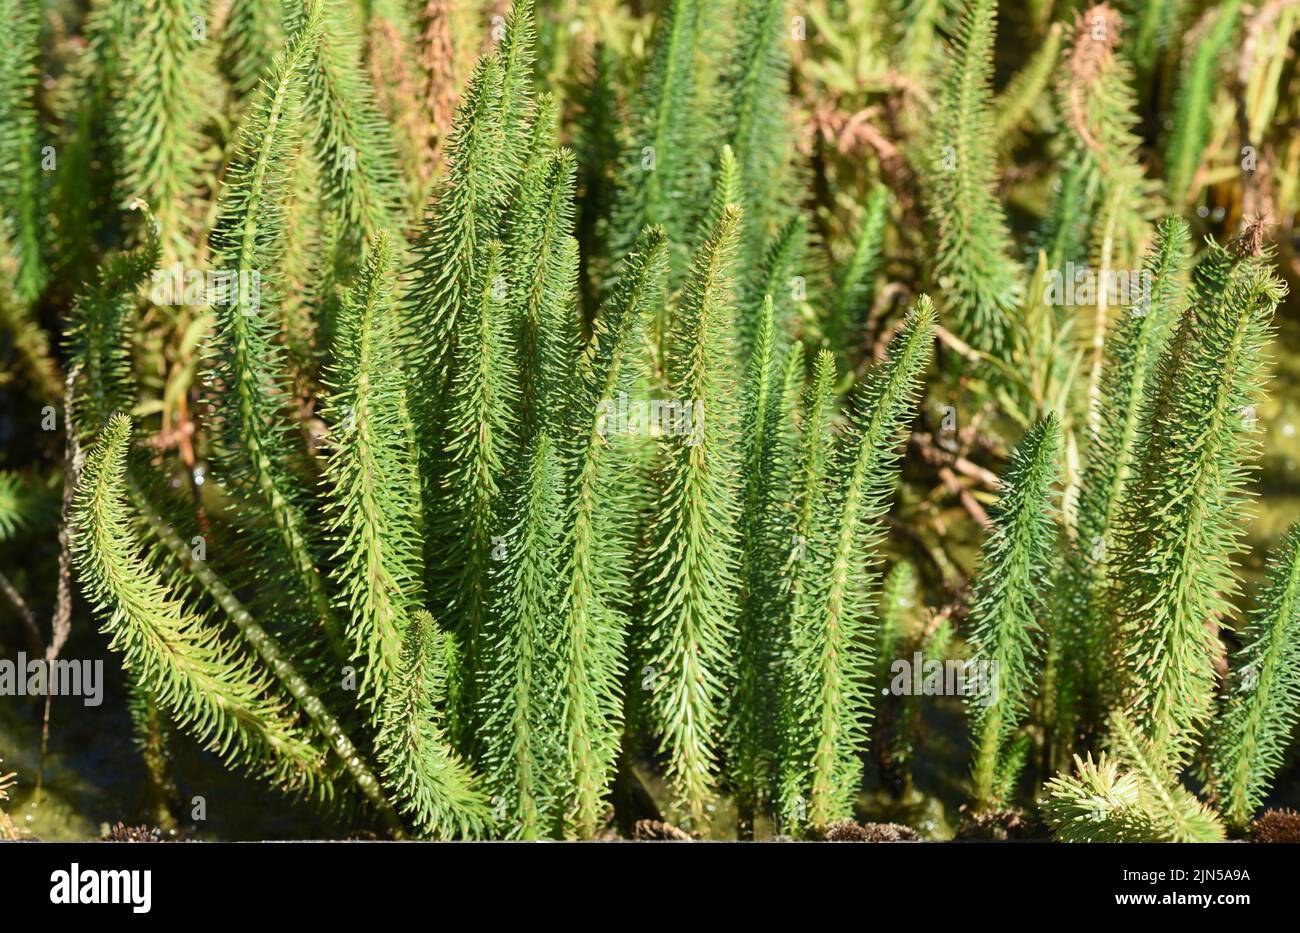 Tannenwedel, Hippuris vulgaris, Blueten ist eine Wasserpflanze. Tannenwedel, Hippuris vulgaris, Blossom is an aquatic plant, Stock Photo